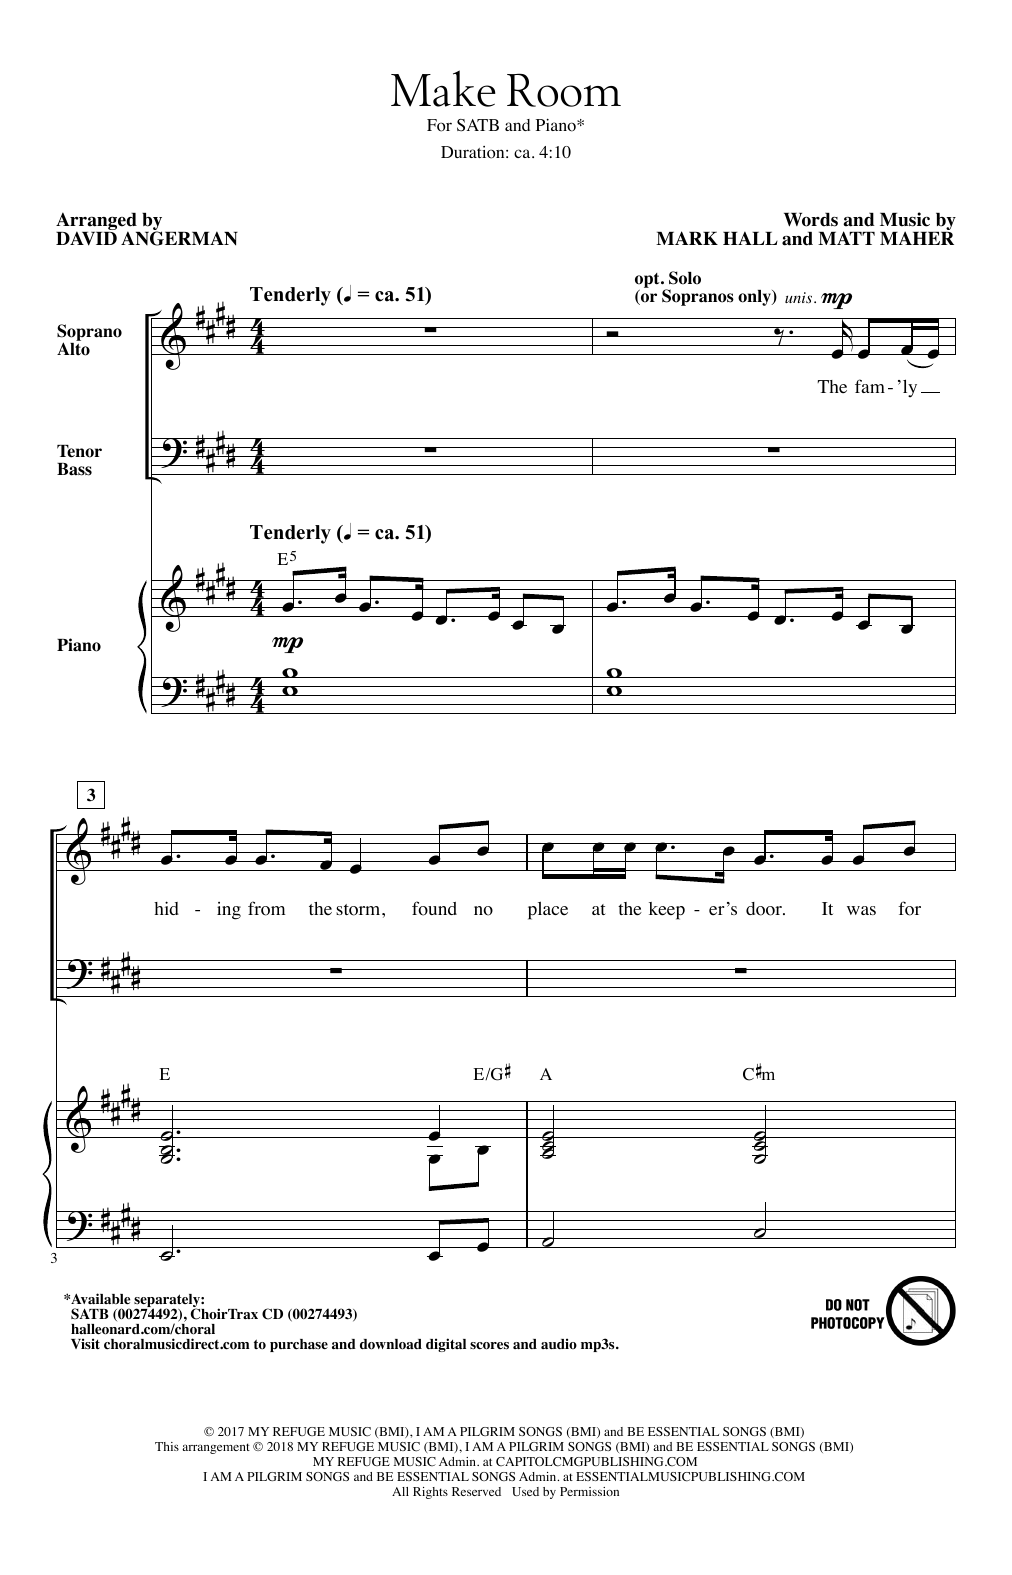 Casting Crowns Make Room (arr. David Angerman) Sheet Music Notes & Chords for SATB Choir - Download or Print PDF